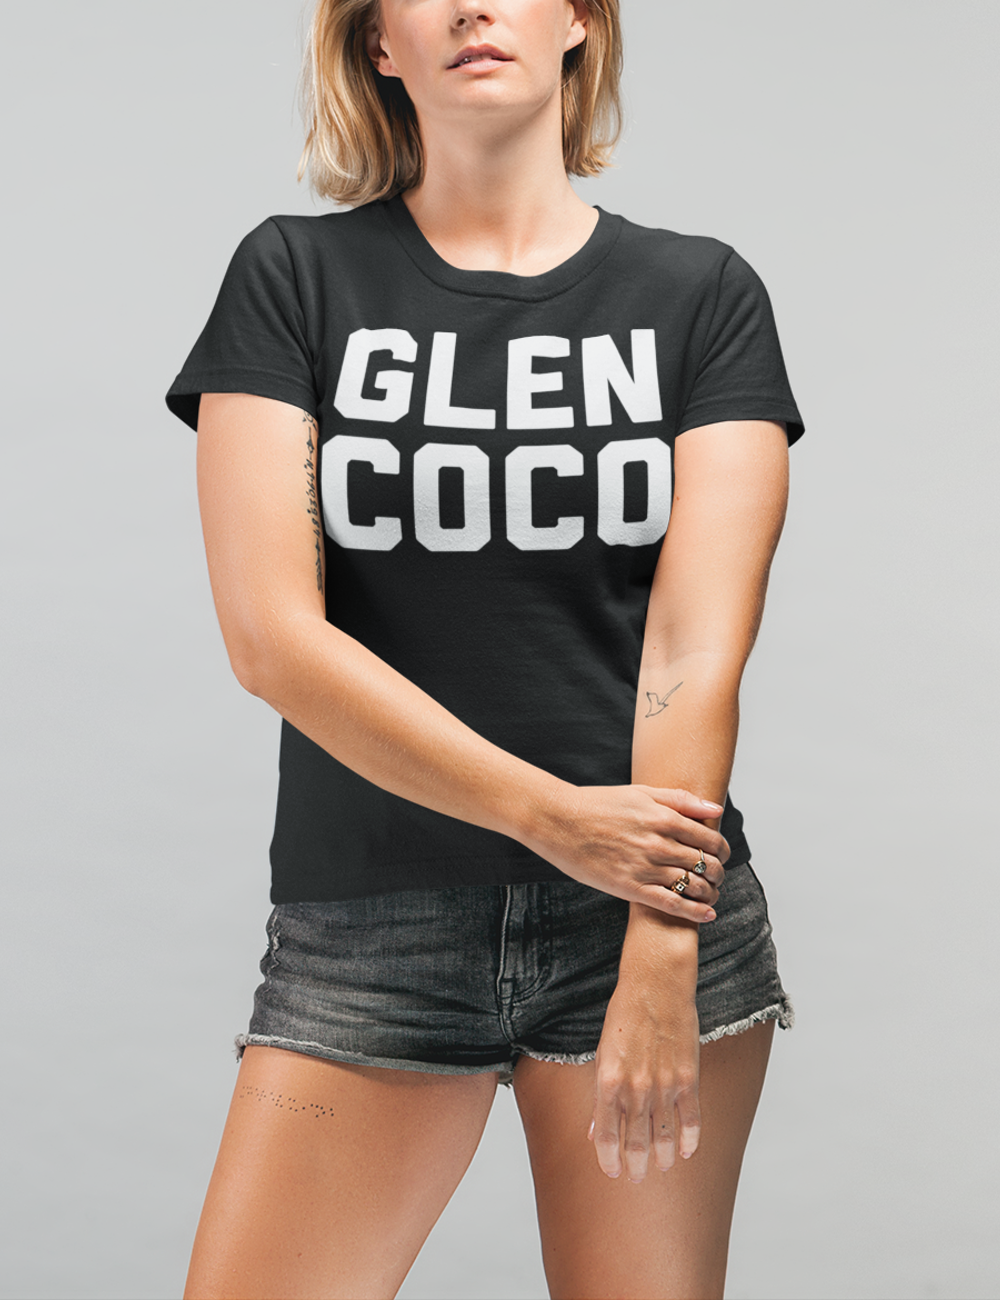 Glen Coco | Women's Style T-Shirt OniTakai